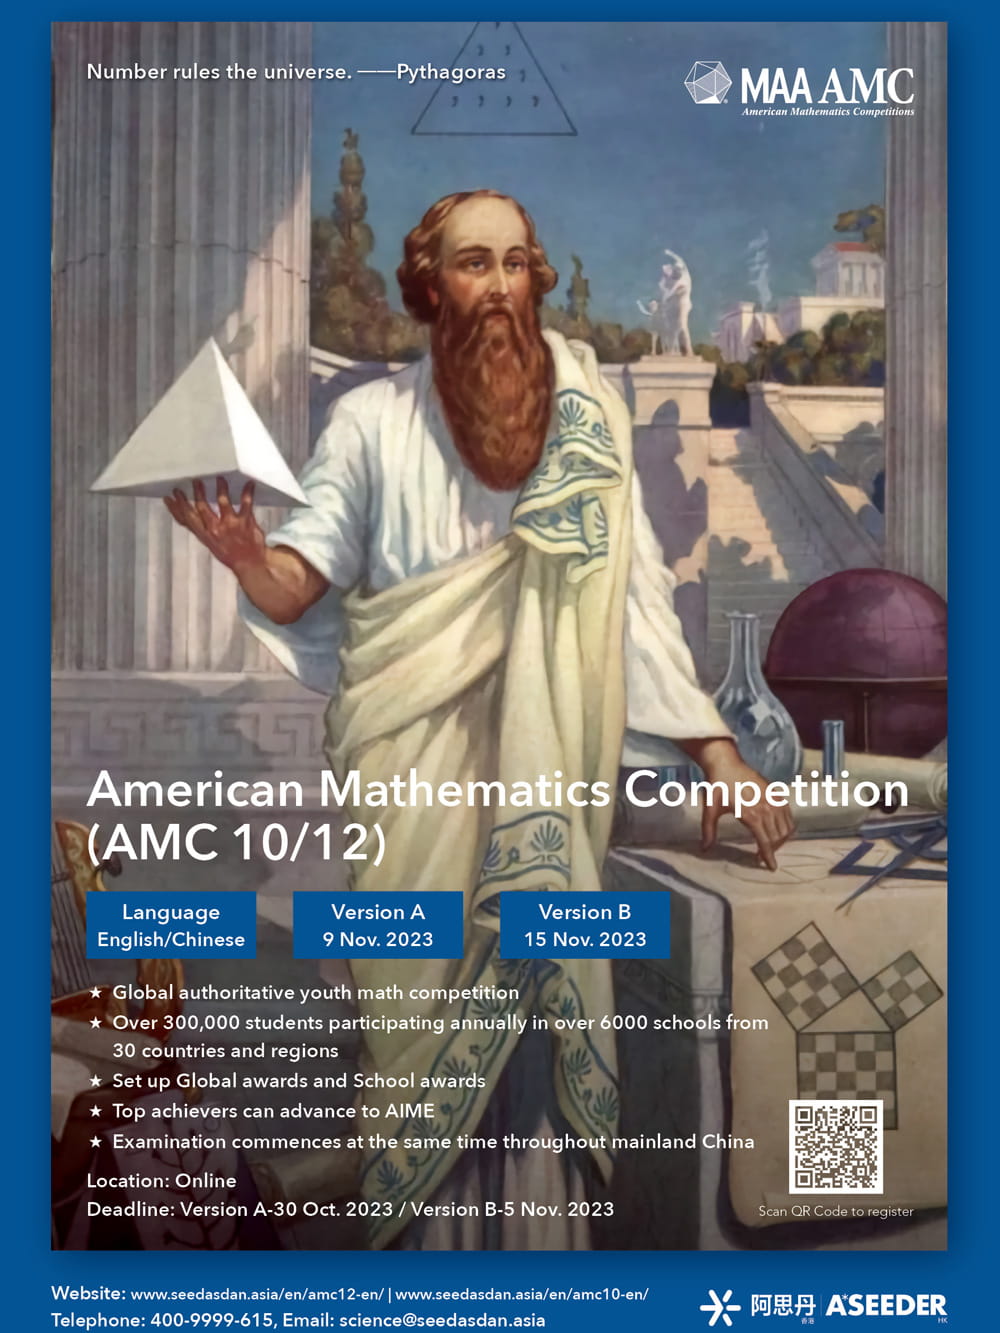 Registration for Mathematics Competitions AMC 10 and AMC 12 Now Open - Registration for Mathematics Competitions AMC 10 and AMC 12 Now Open